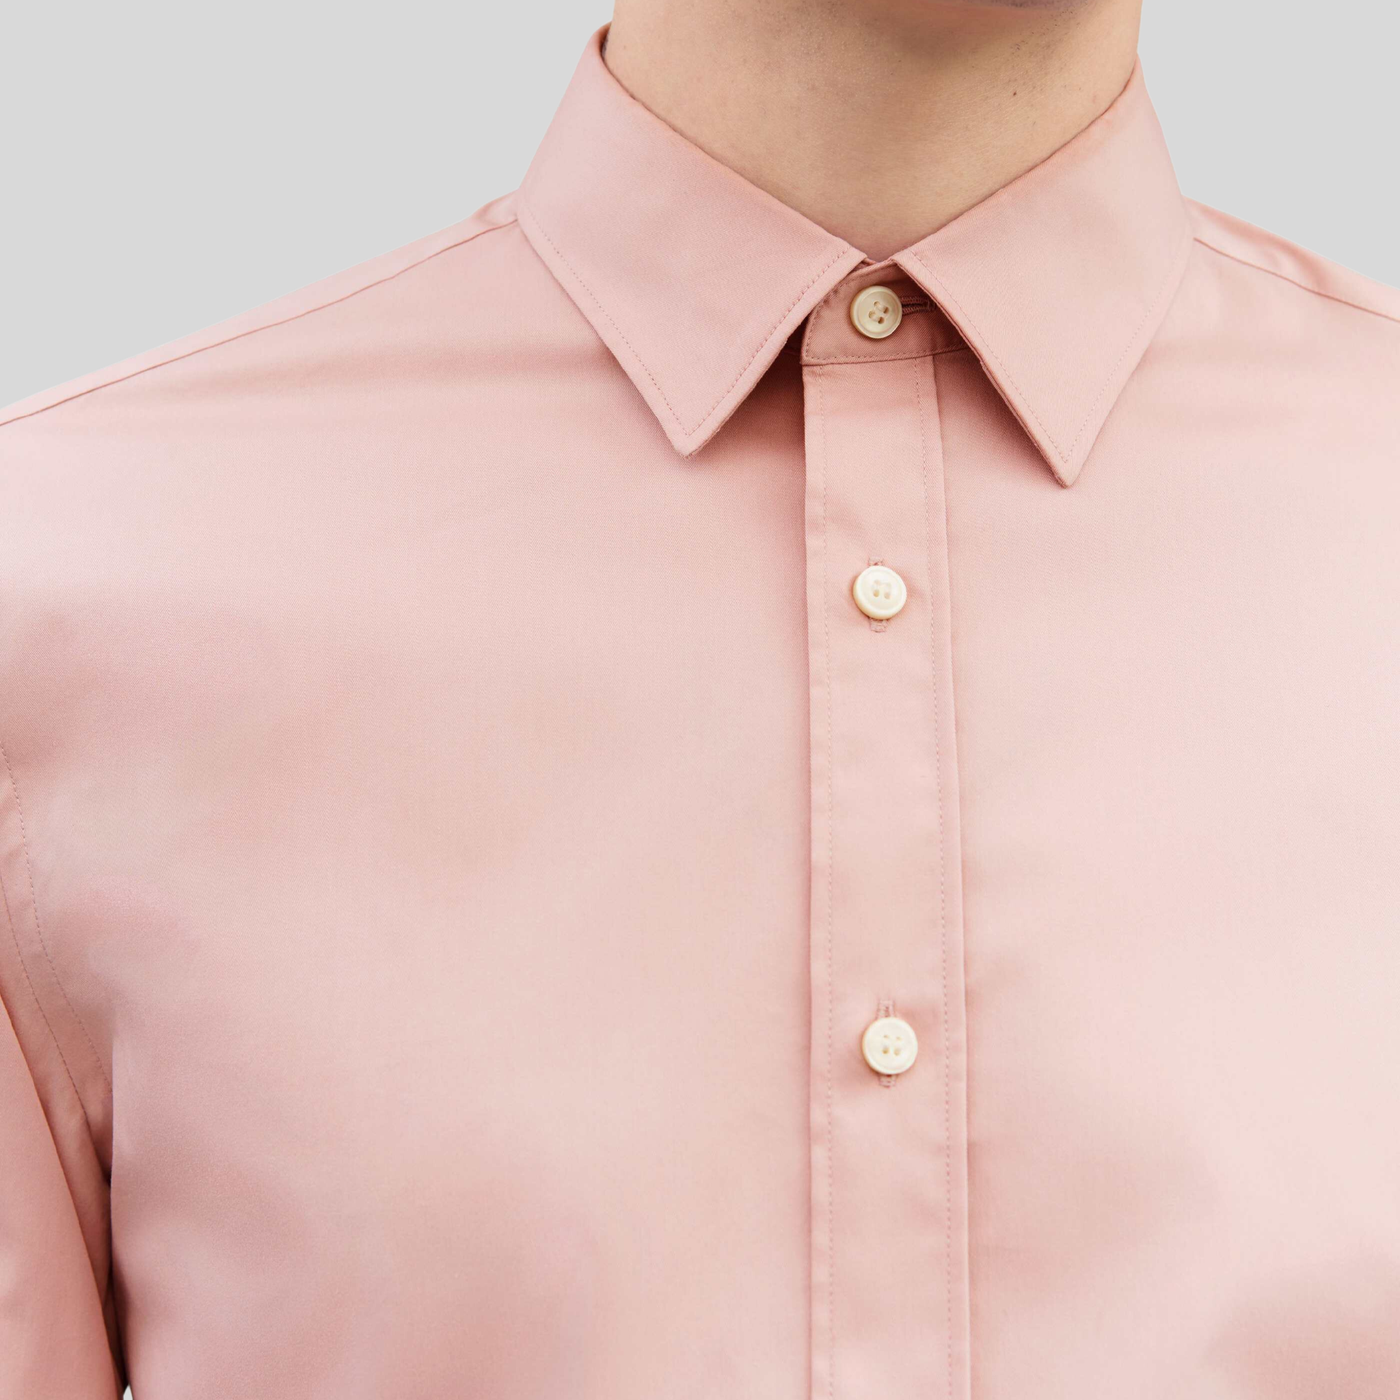 Gotstyle Fashion - Tiger Of Sweden Collar Shirts Twill Stretch Cotton Blend Shirt - Light Rose